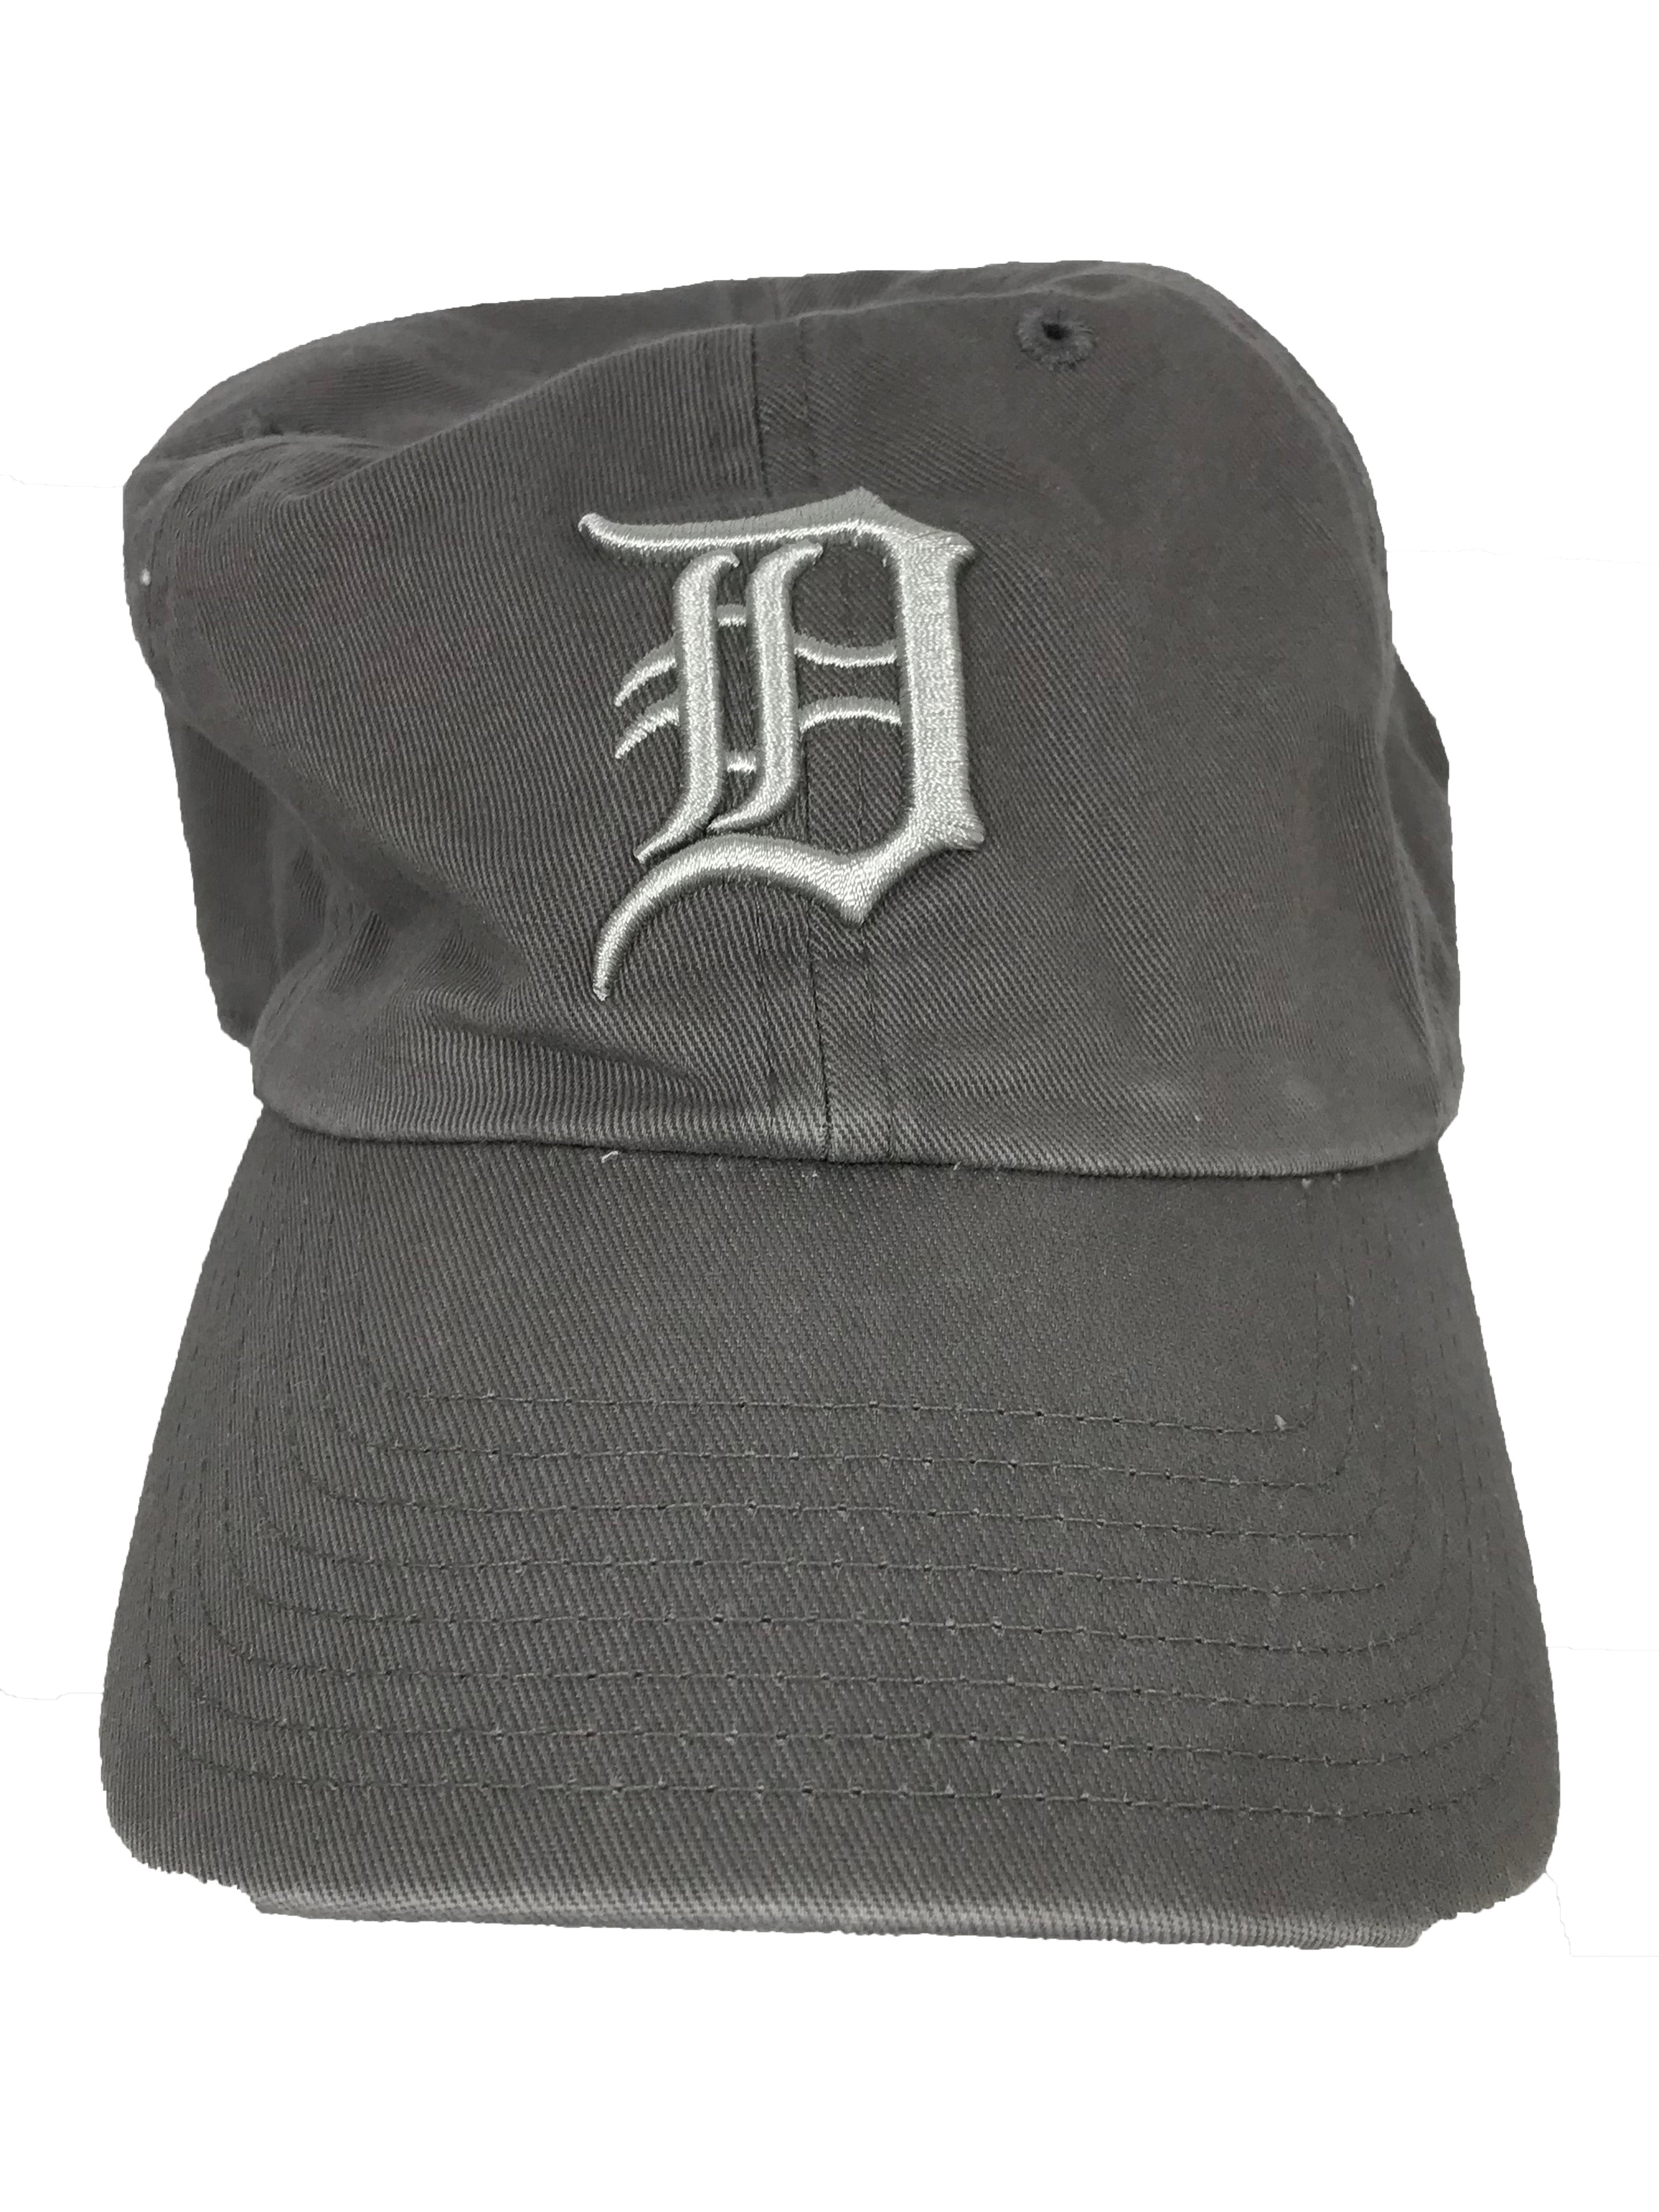 New Era '47 Gray Detroit Tigers Adjustable Hat – MSU Surplus Store